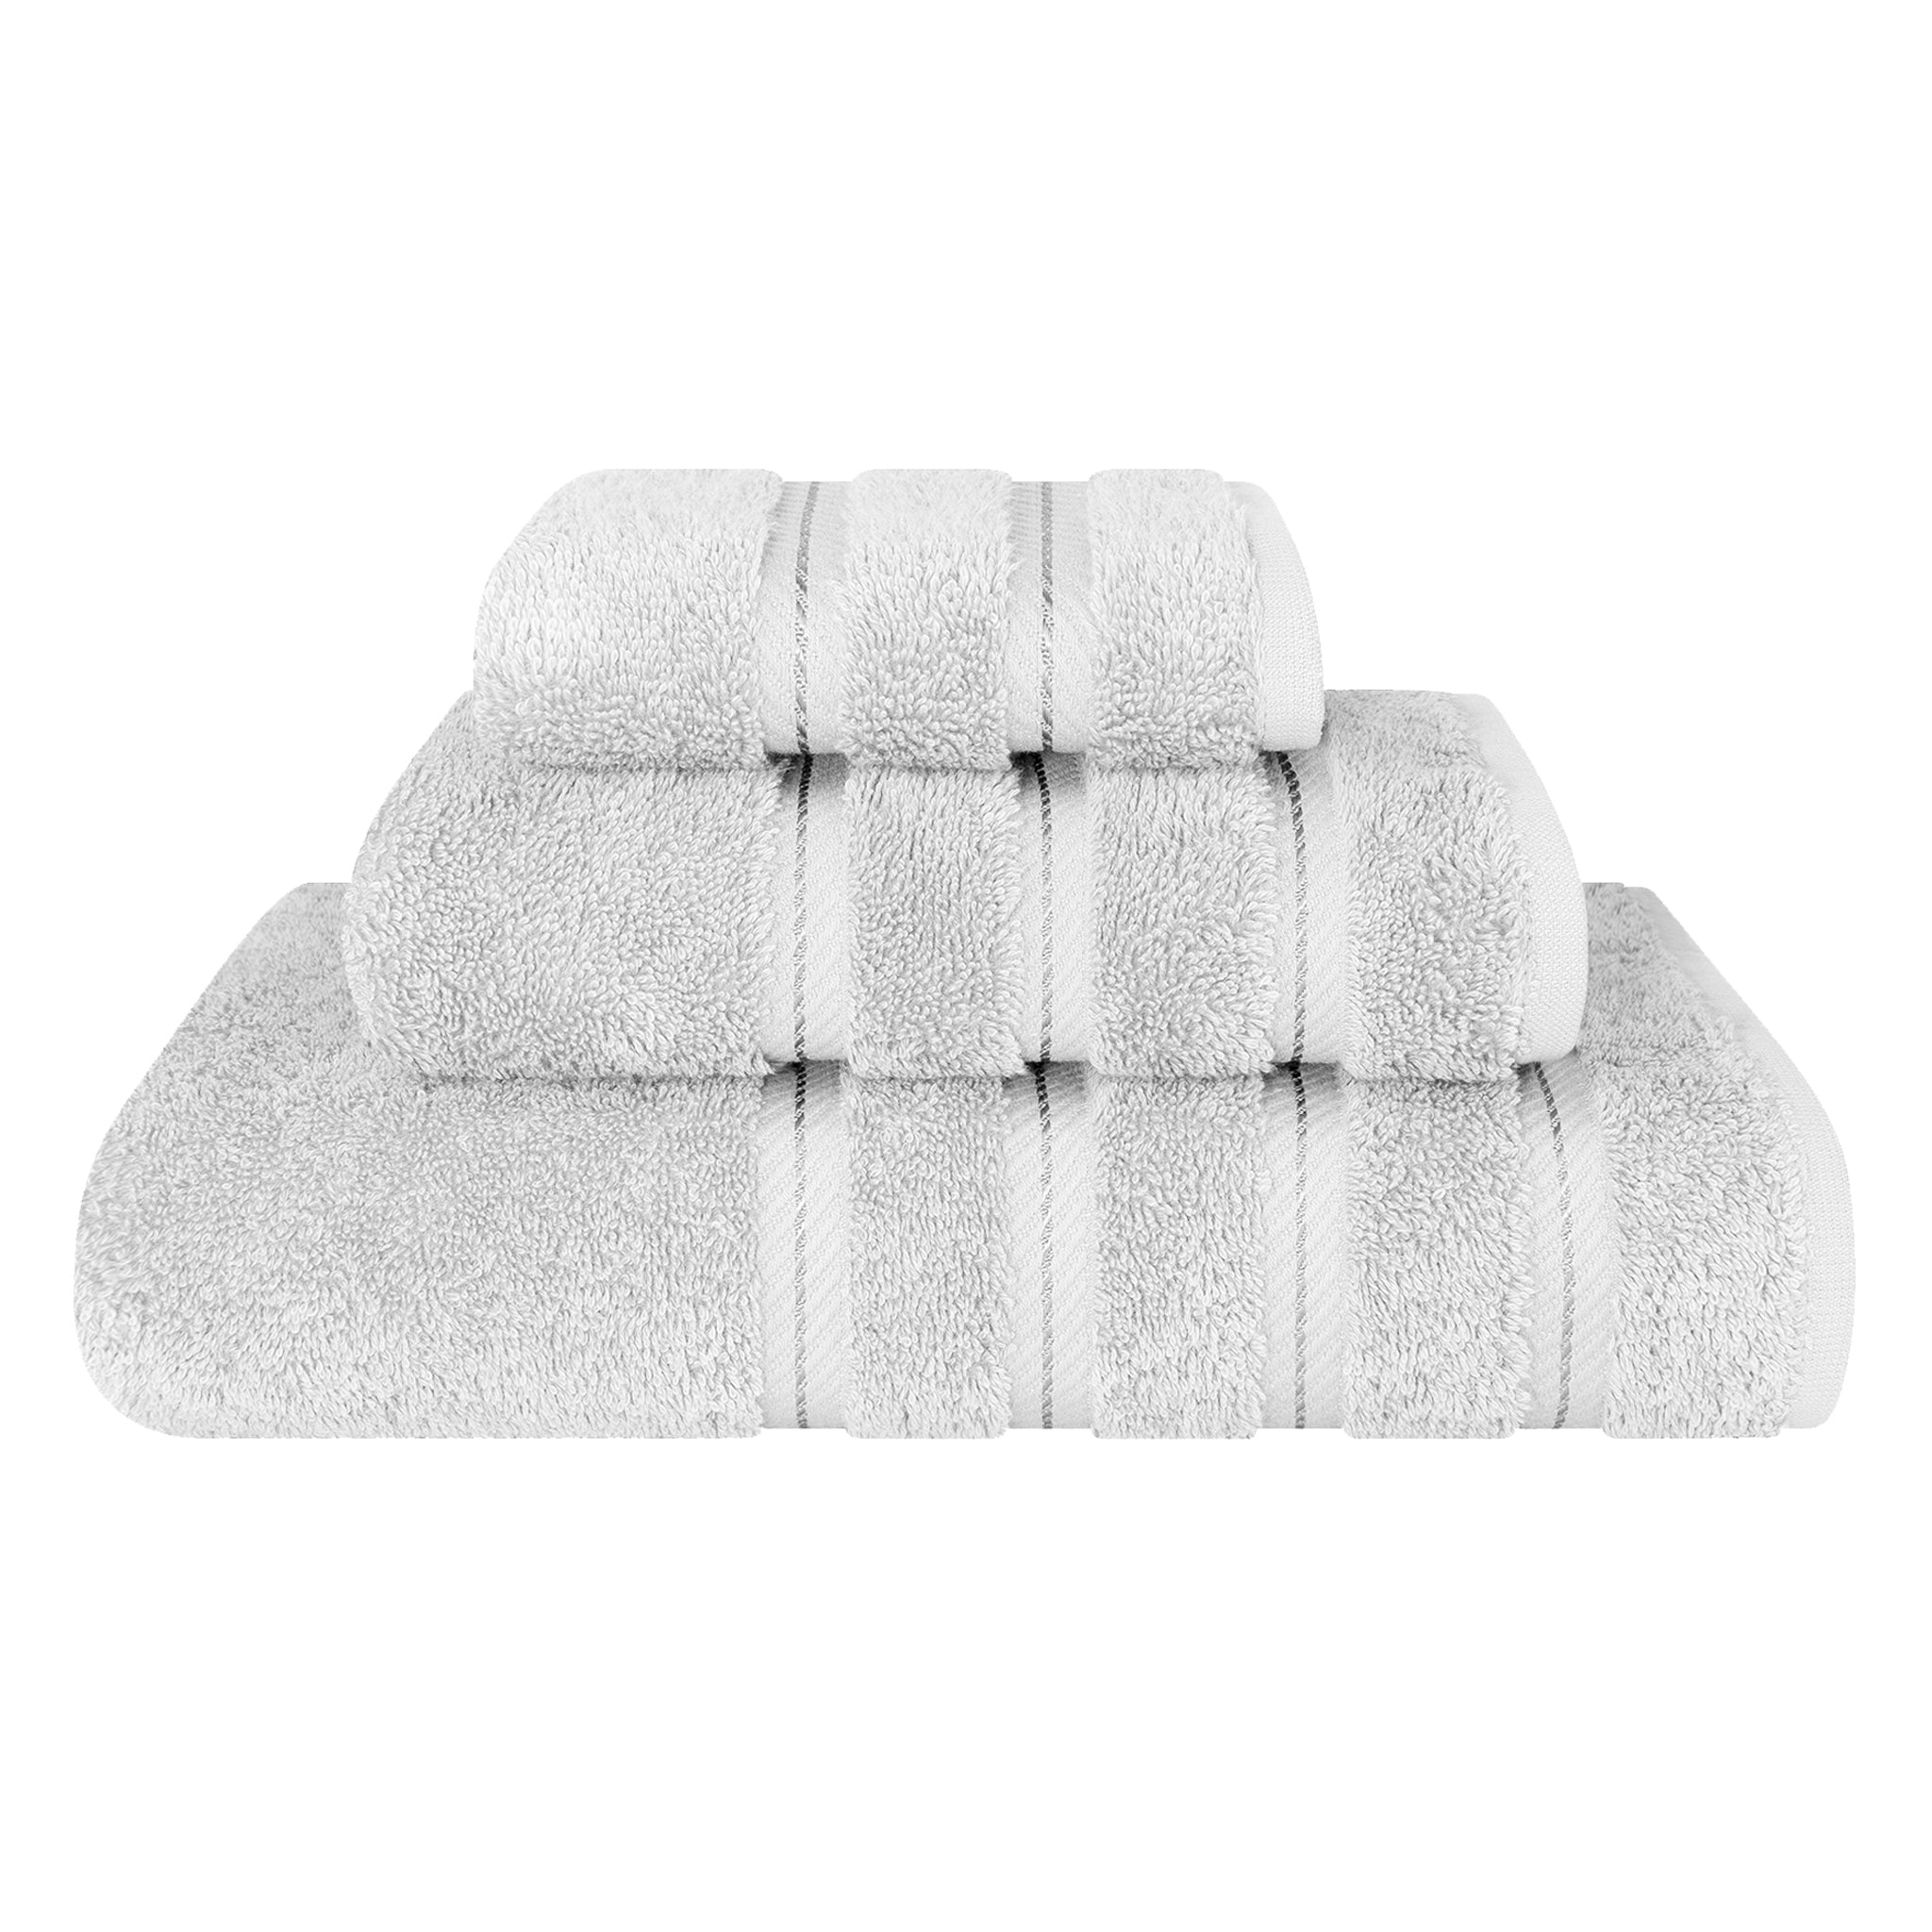 American Soft Linen 3 Piece Luxury Hotel Towel Set 20 set case pack silver-gray-1